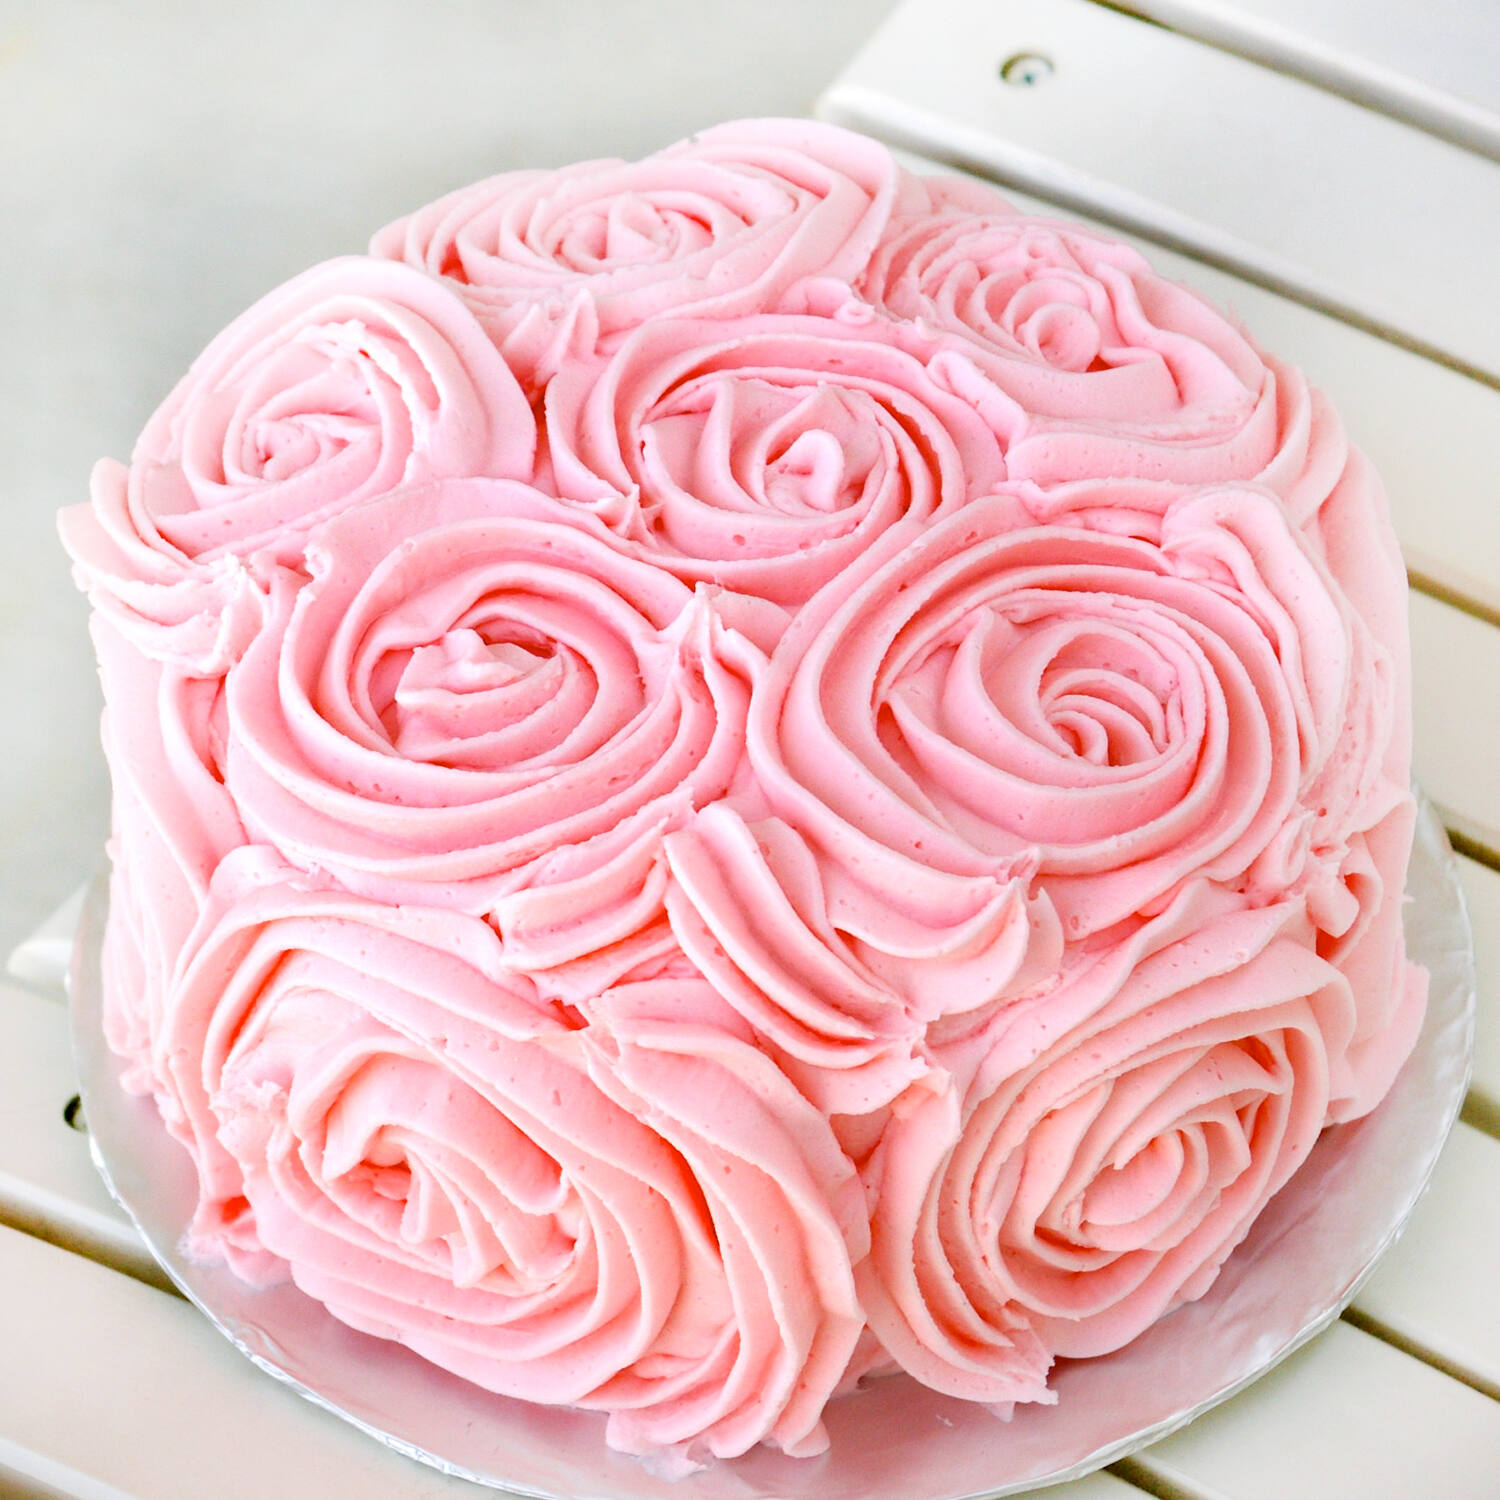 Special Chocolate Rose Cake |